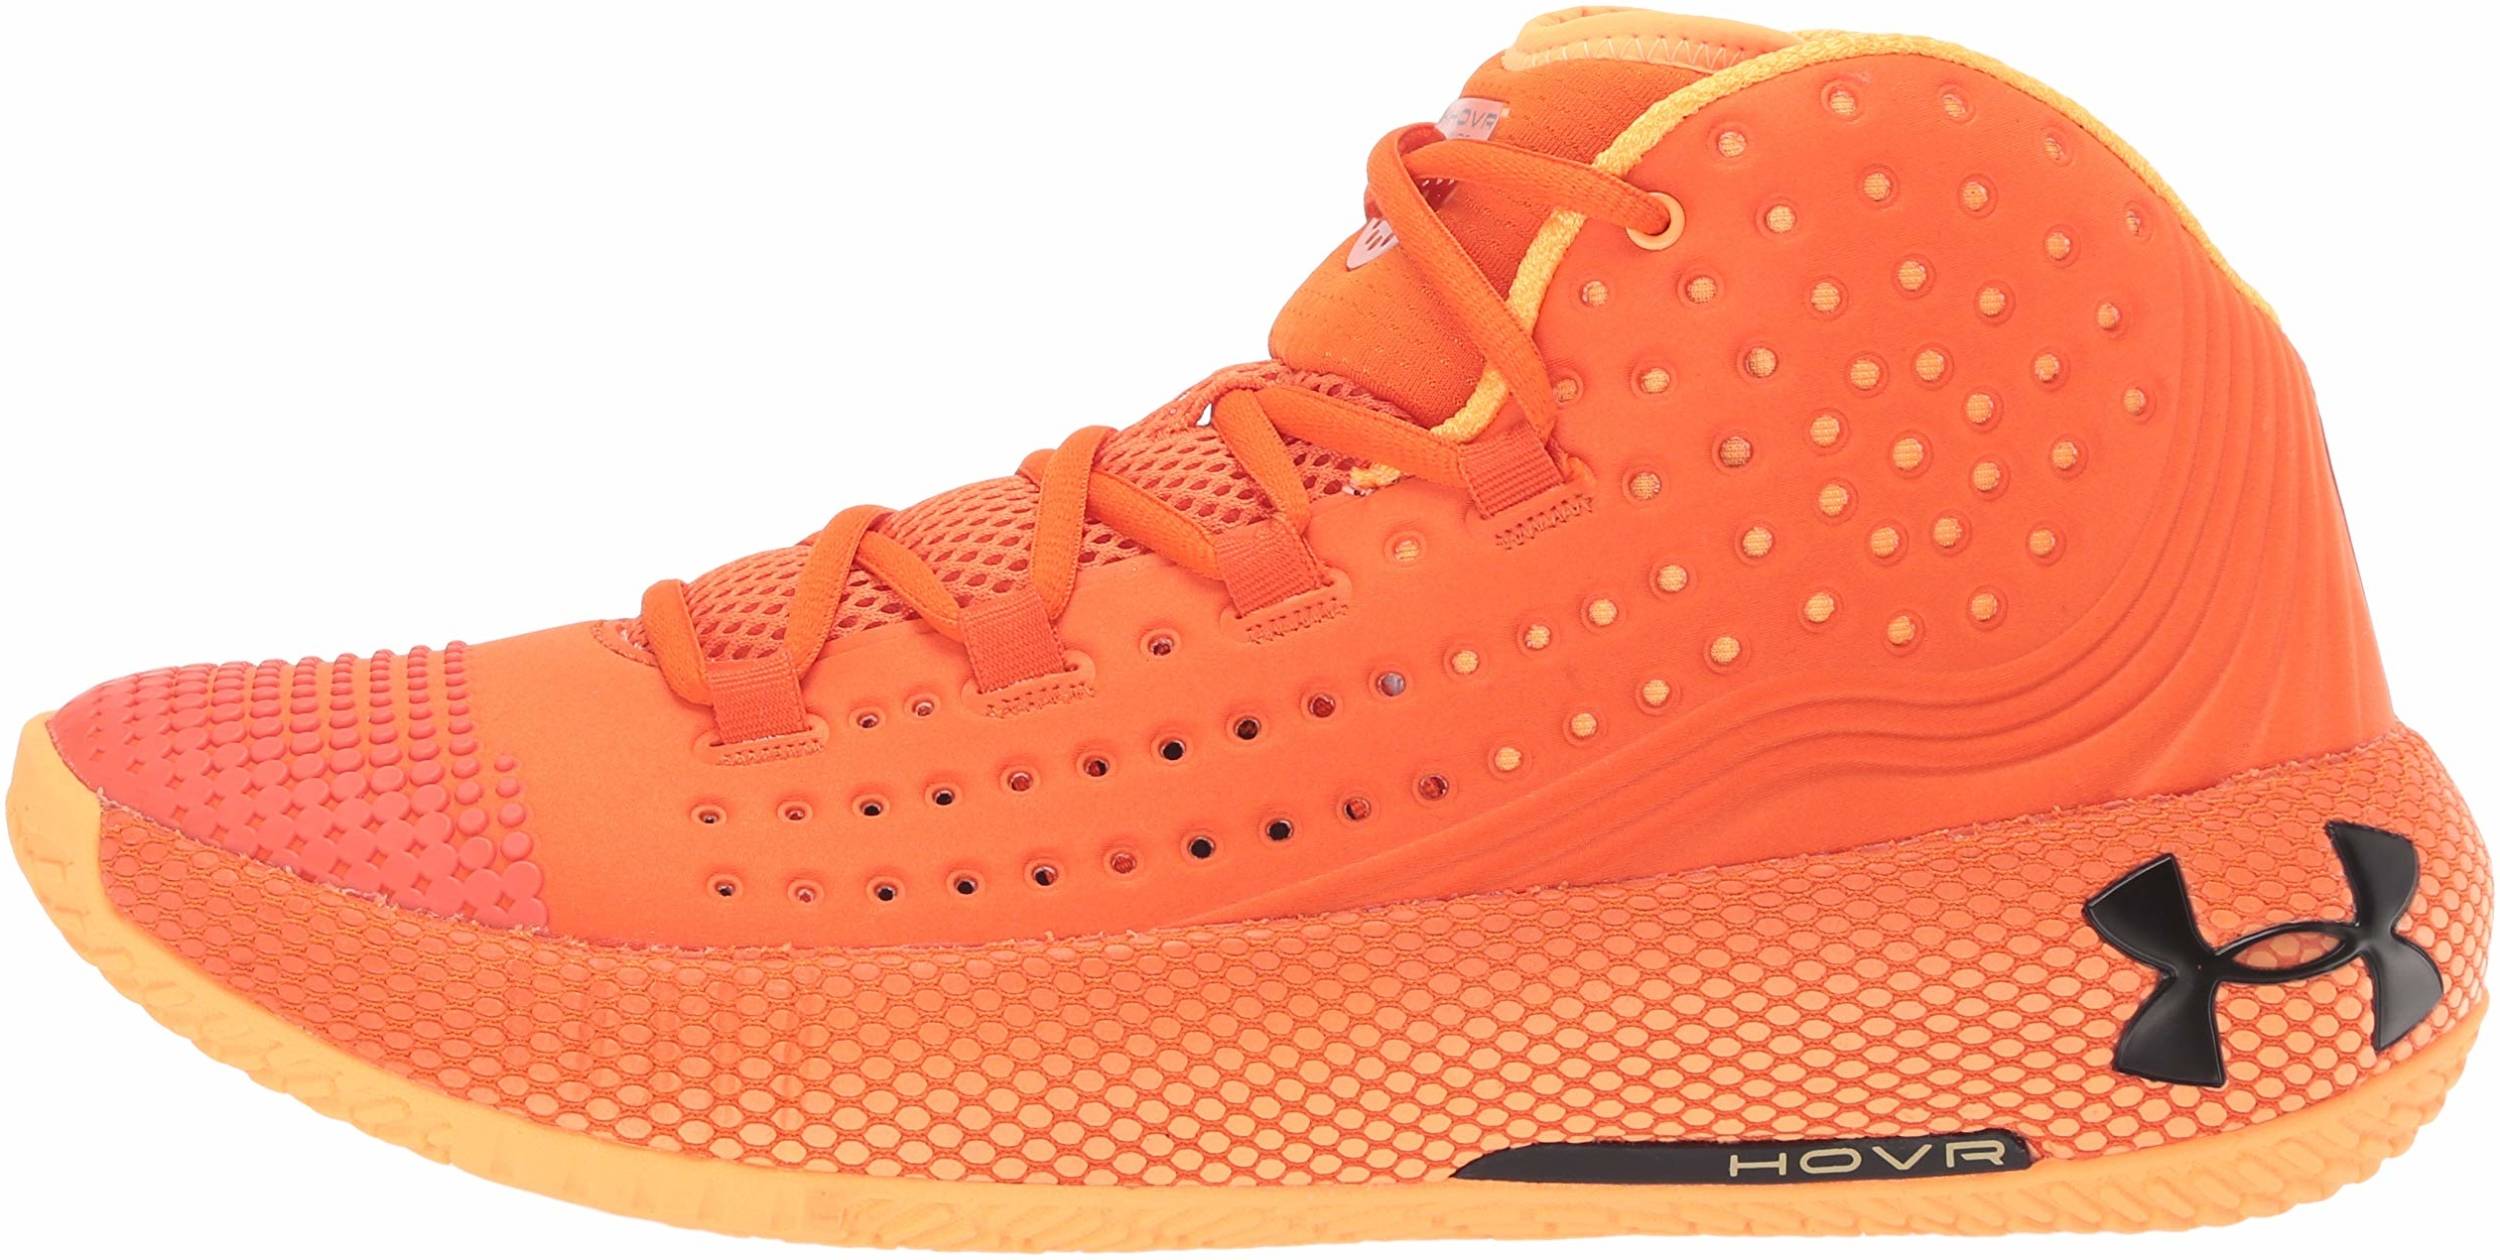 Orange Under Armour Basketball Shoes 